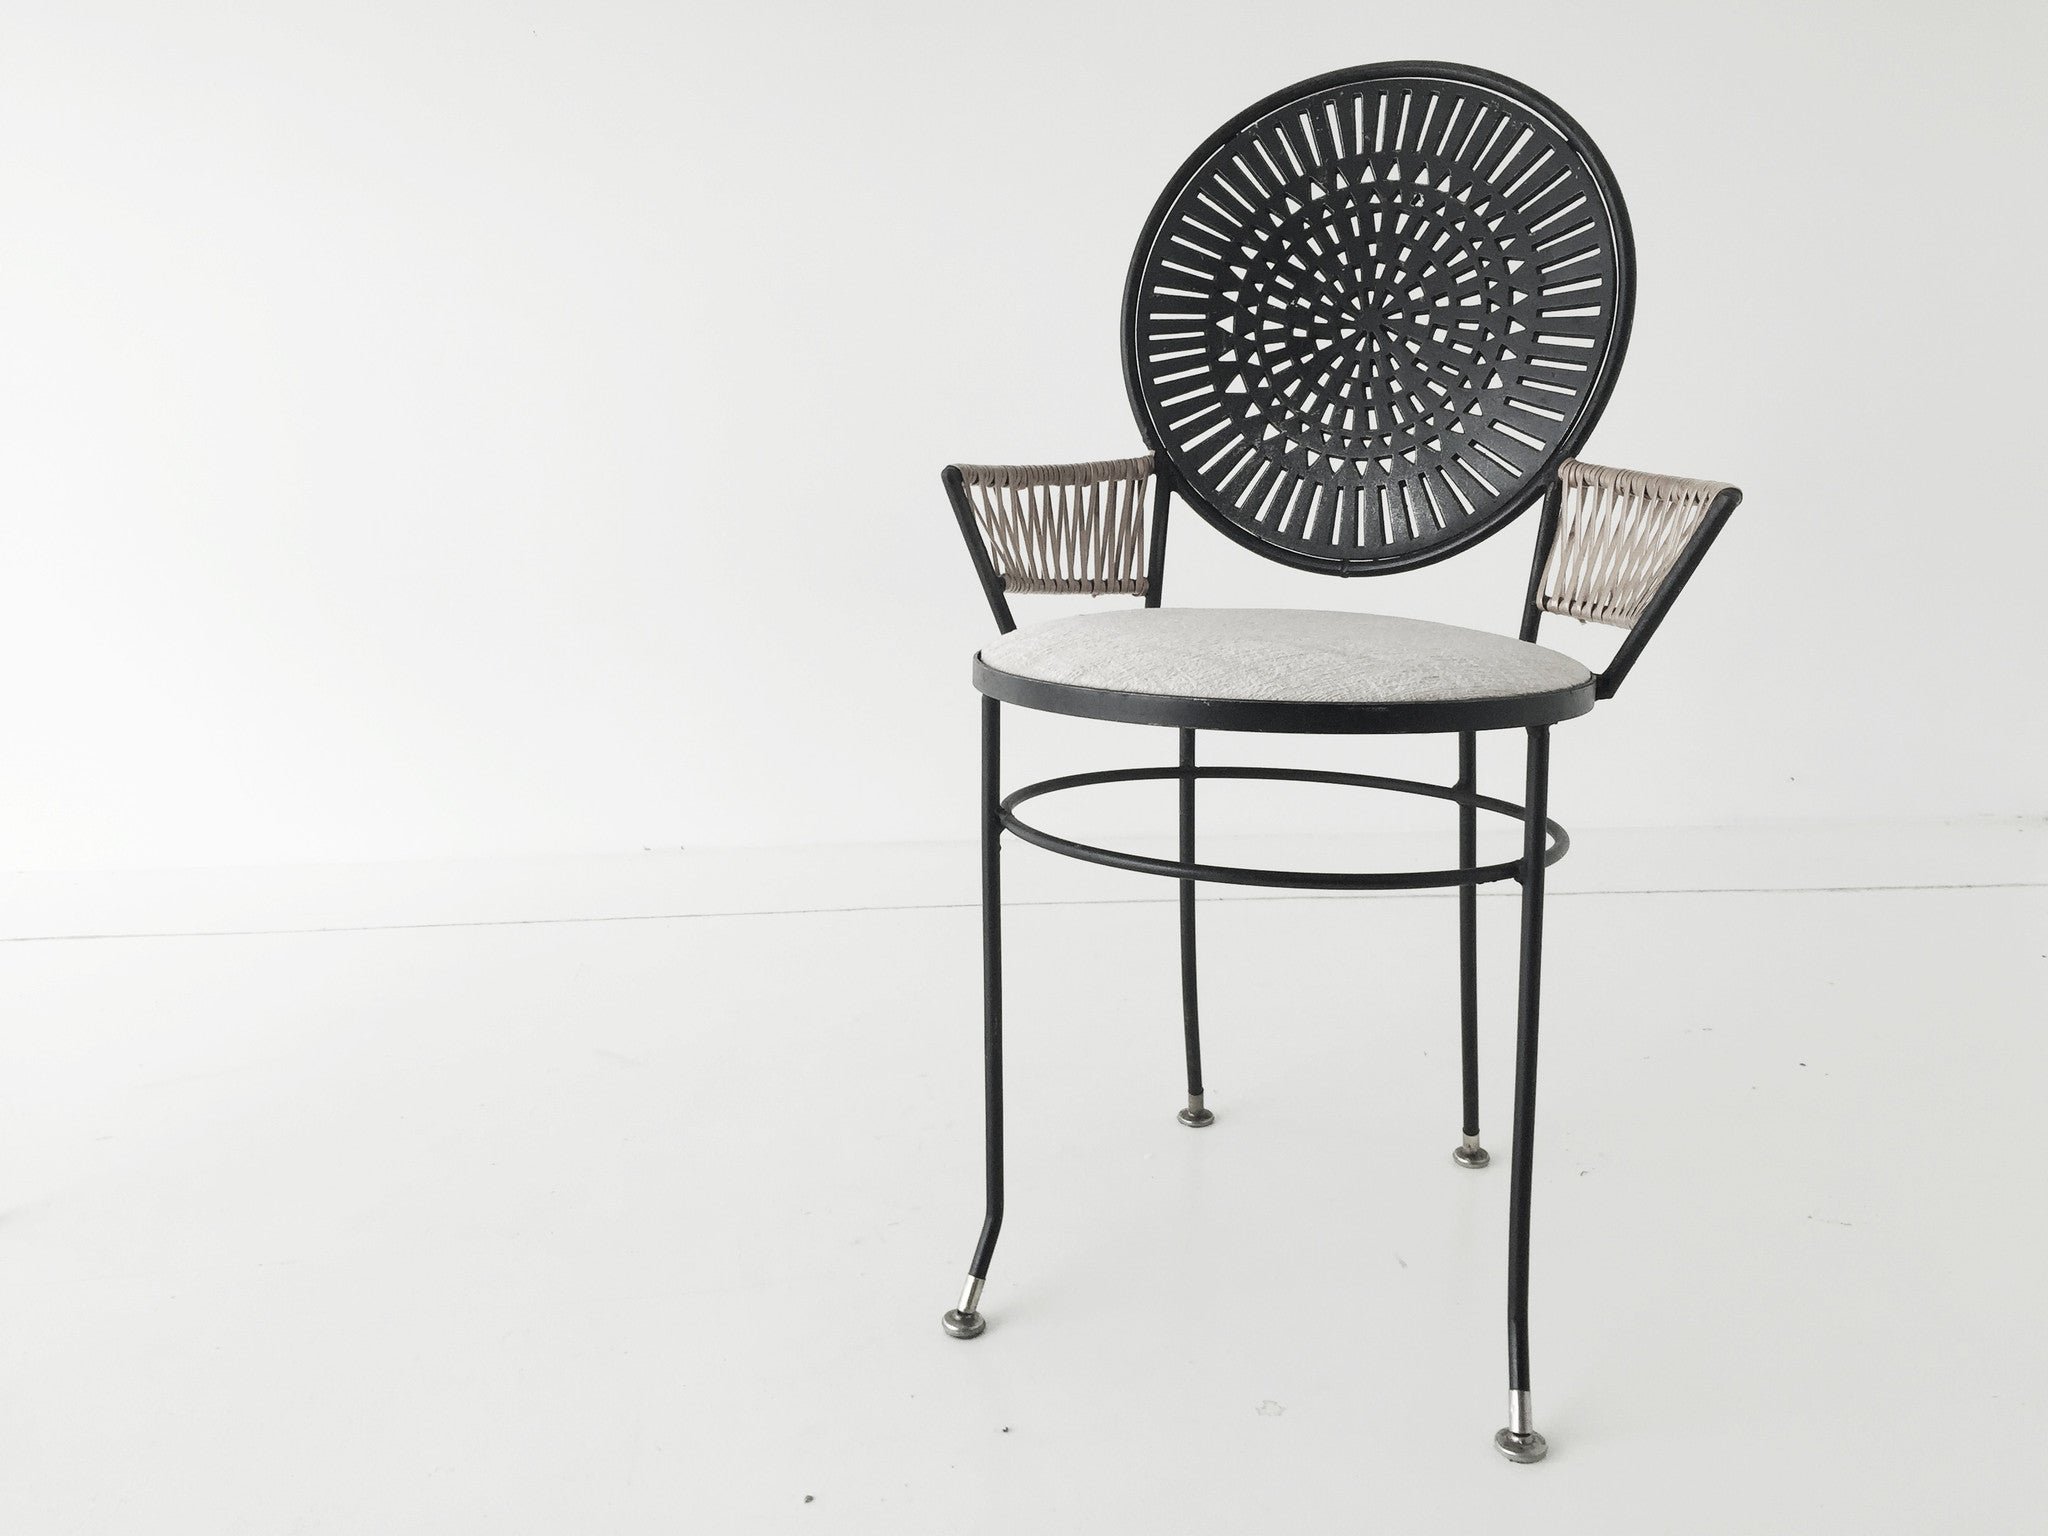 Arthur-Umanoff-Dining-Chairs-Shaver-Howard-05261604-03